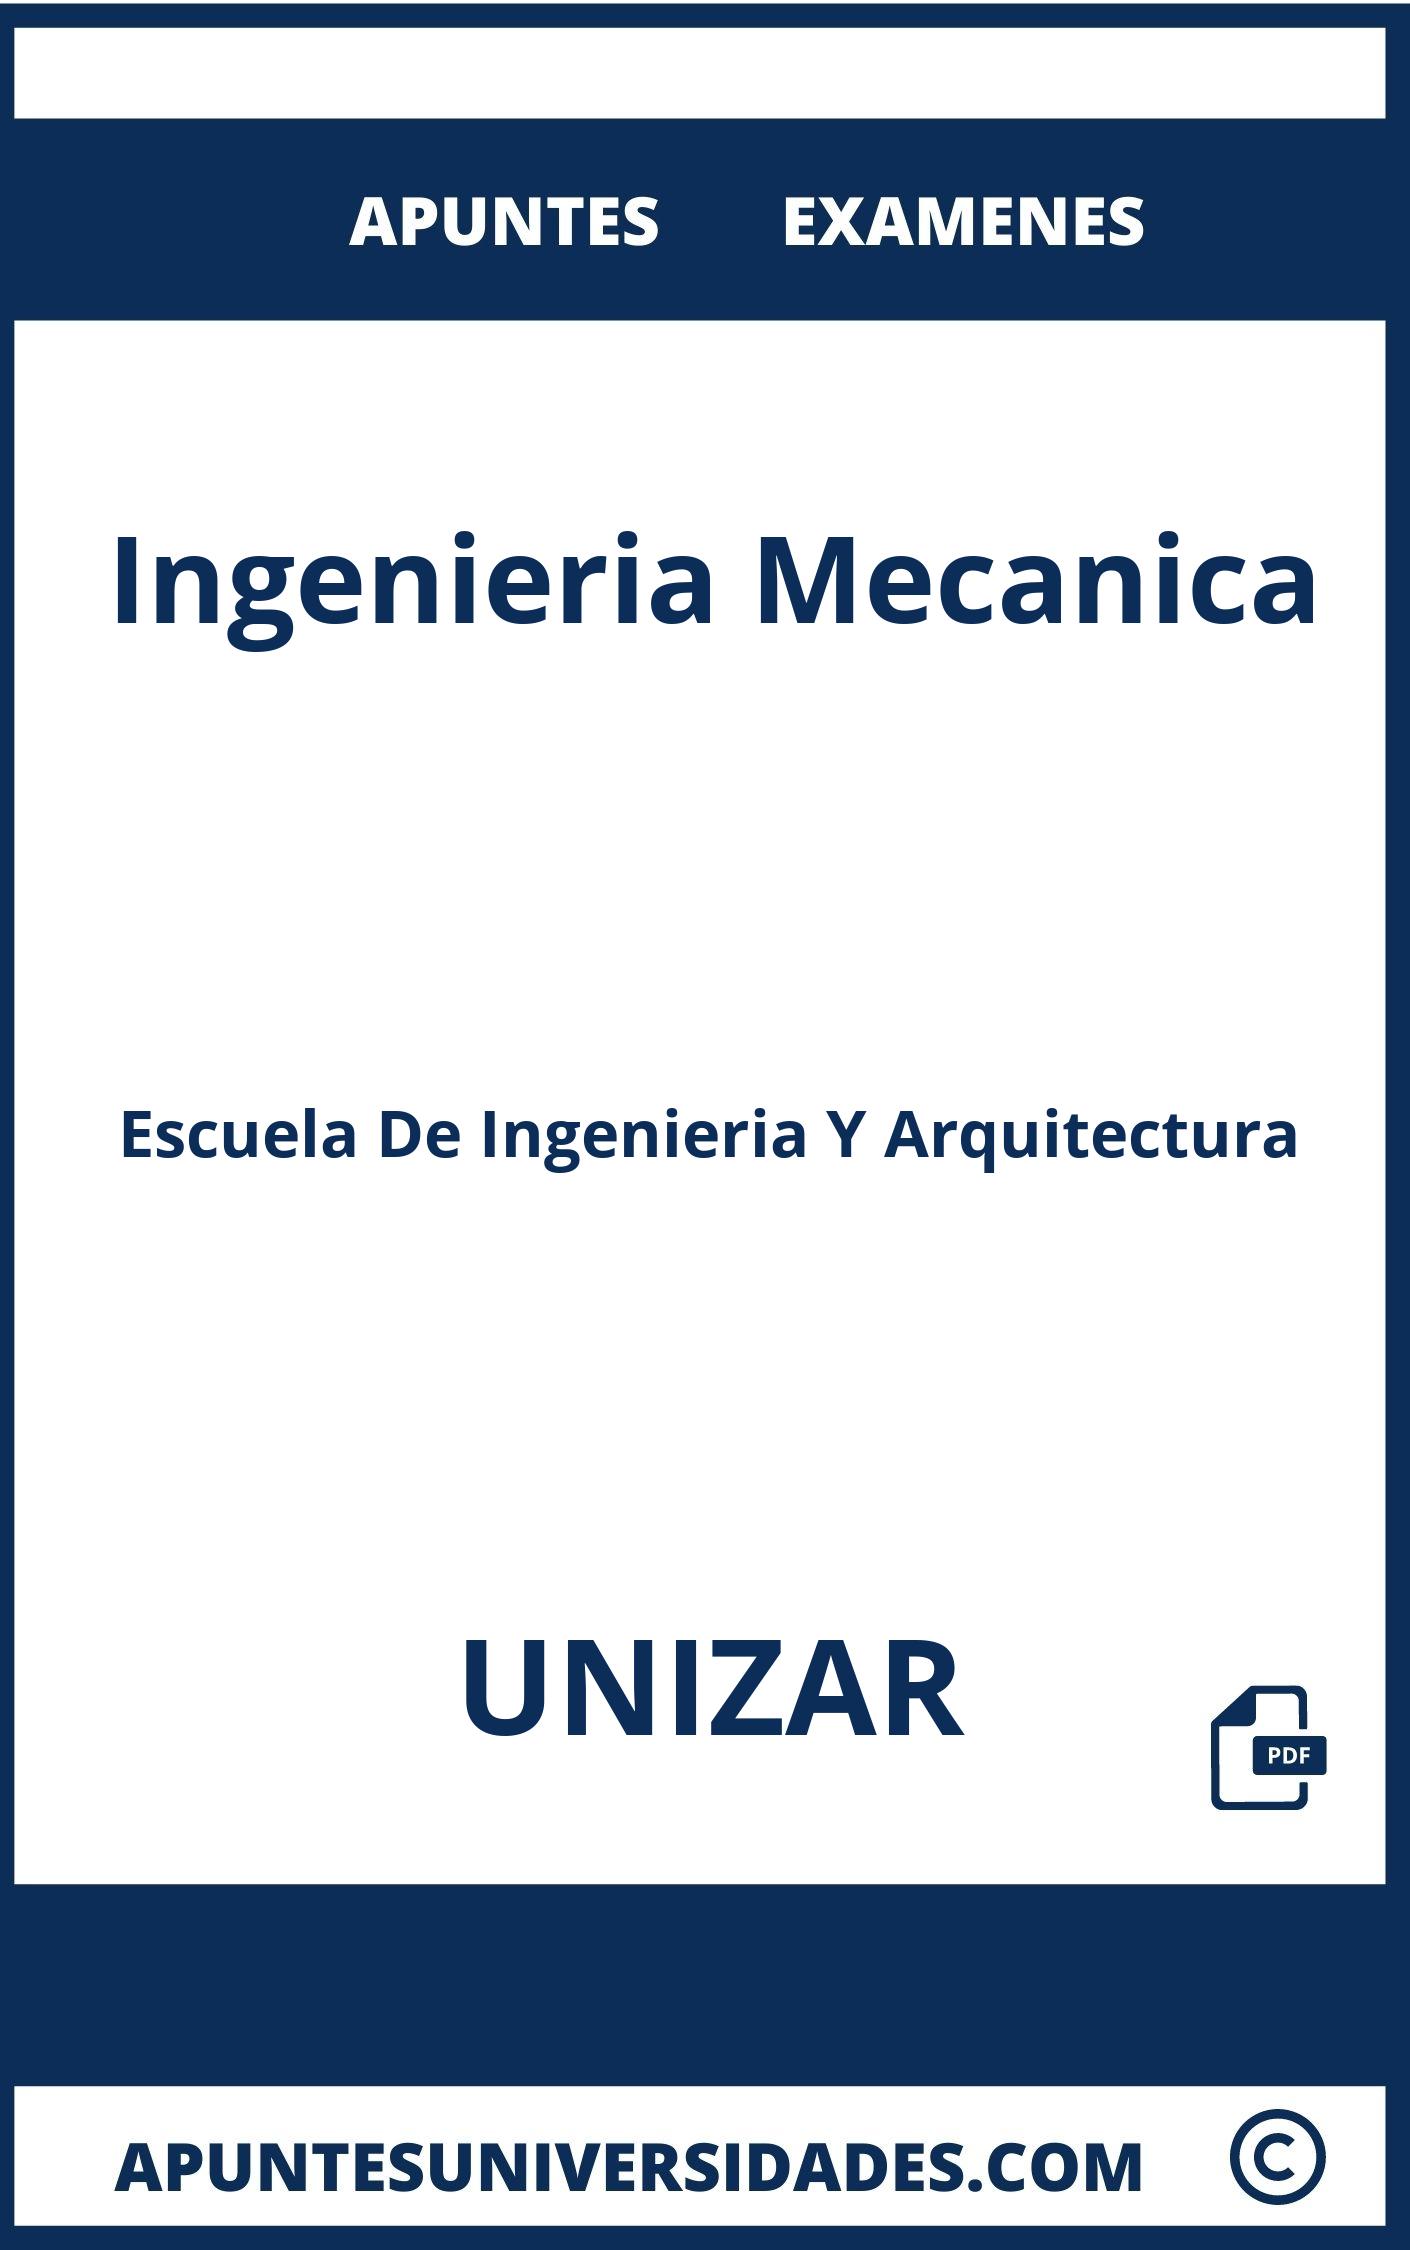 Apuntes Examenes Ingenieria Mecanica UNIZAR